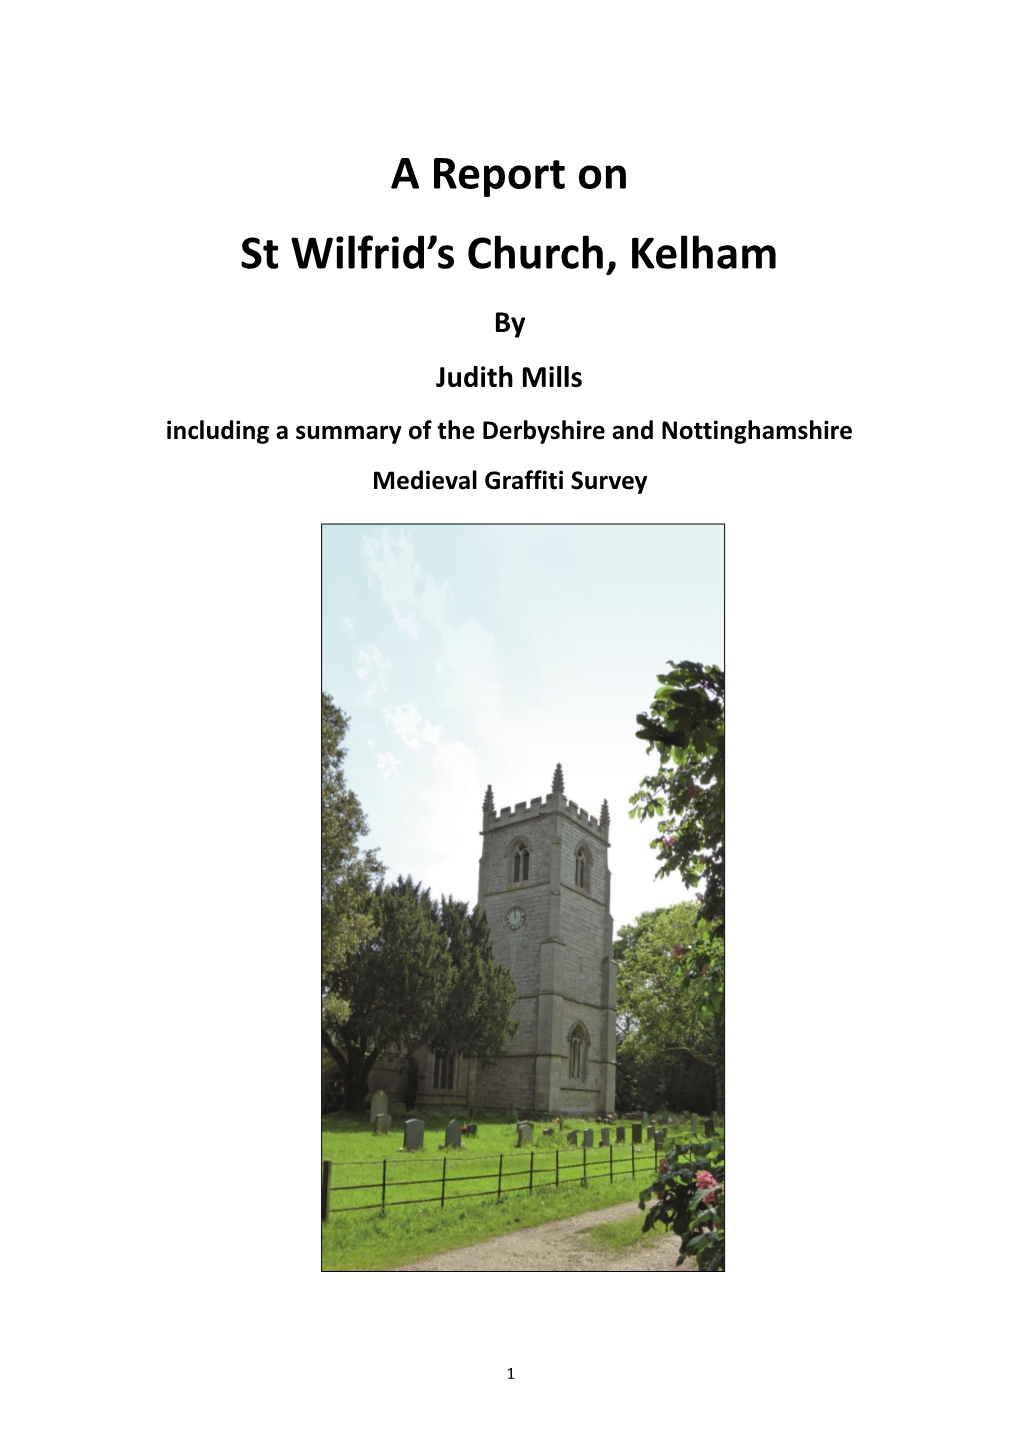 A Report on St Wilfrid's Church, Kelham